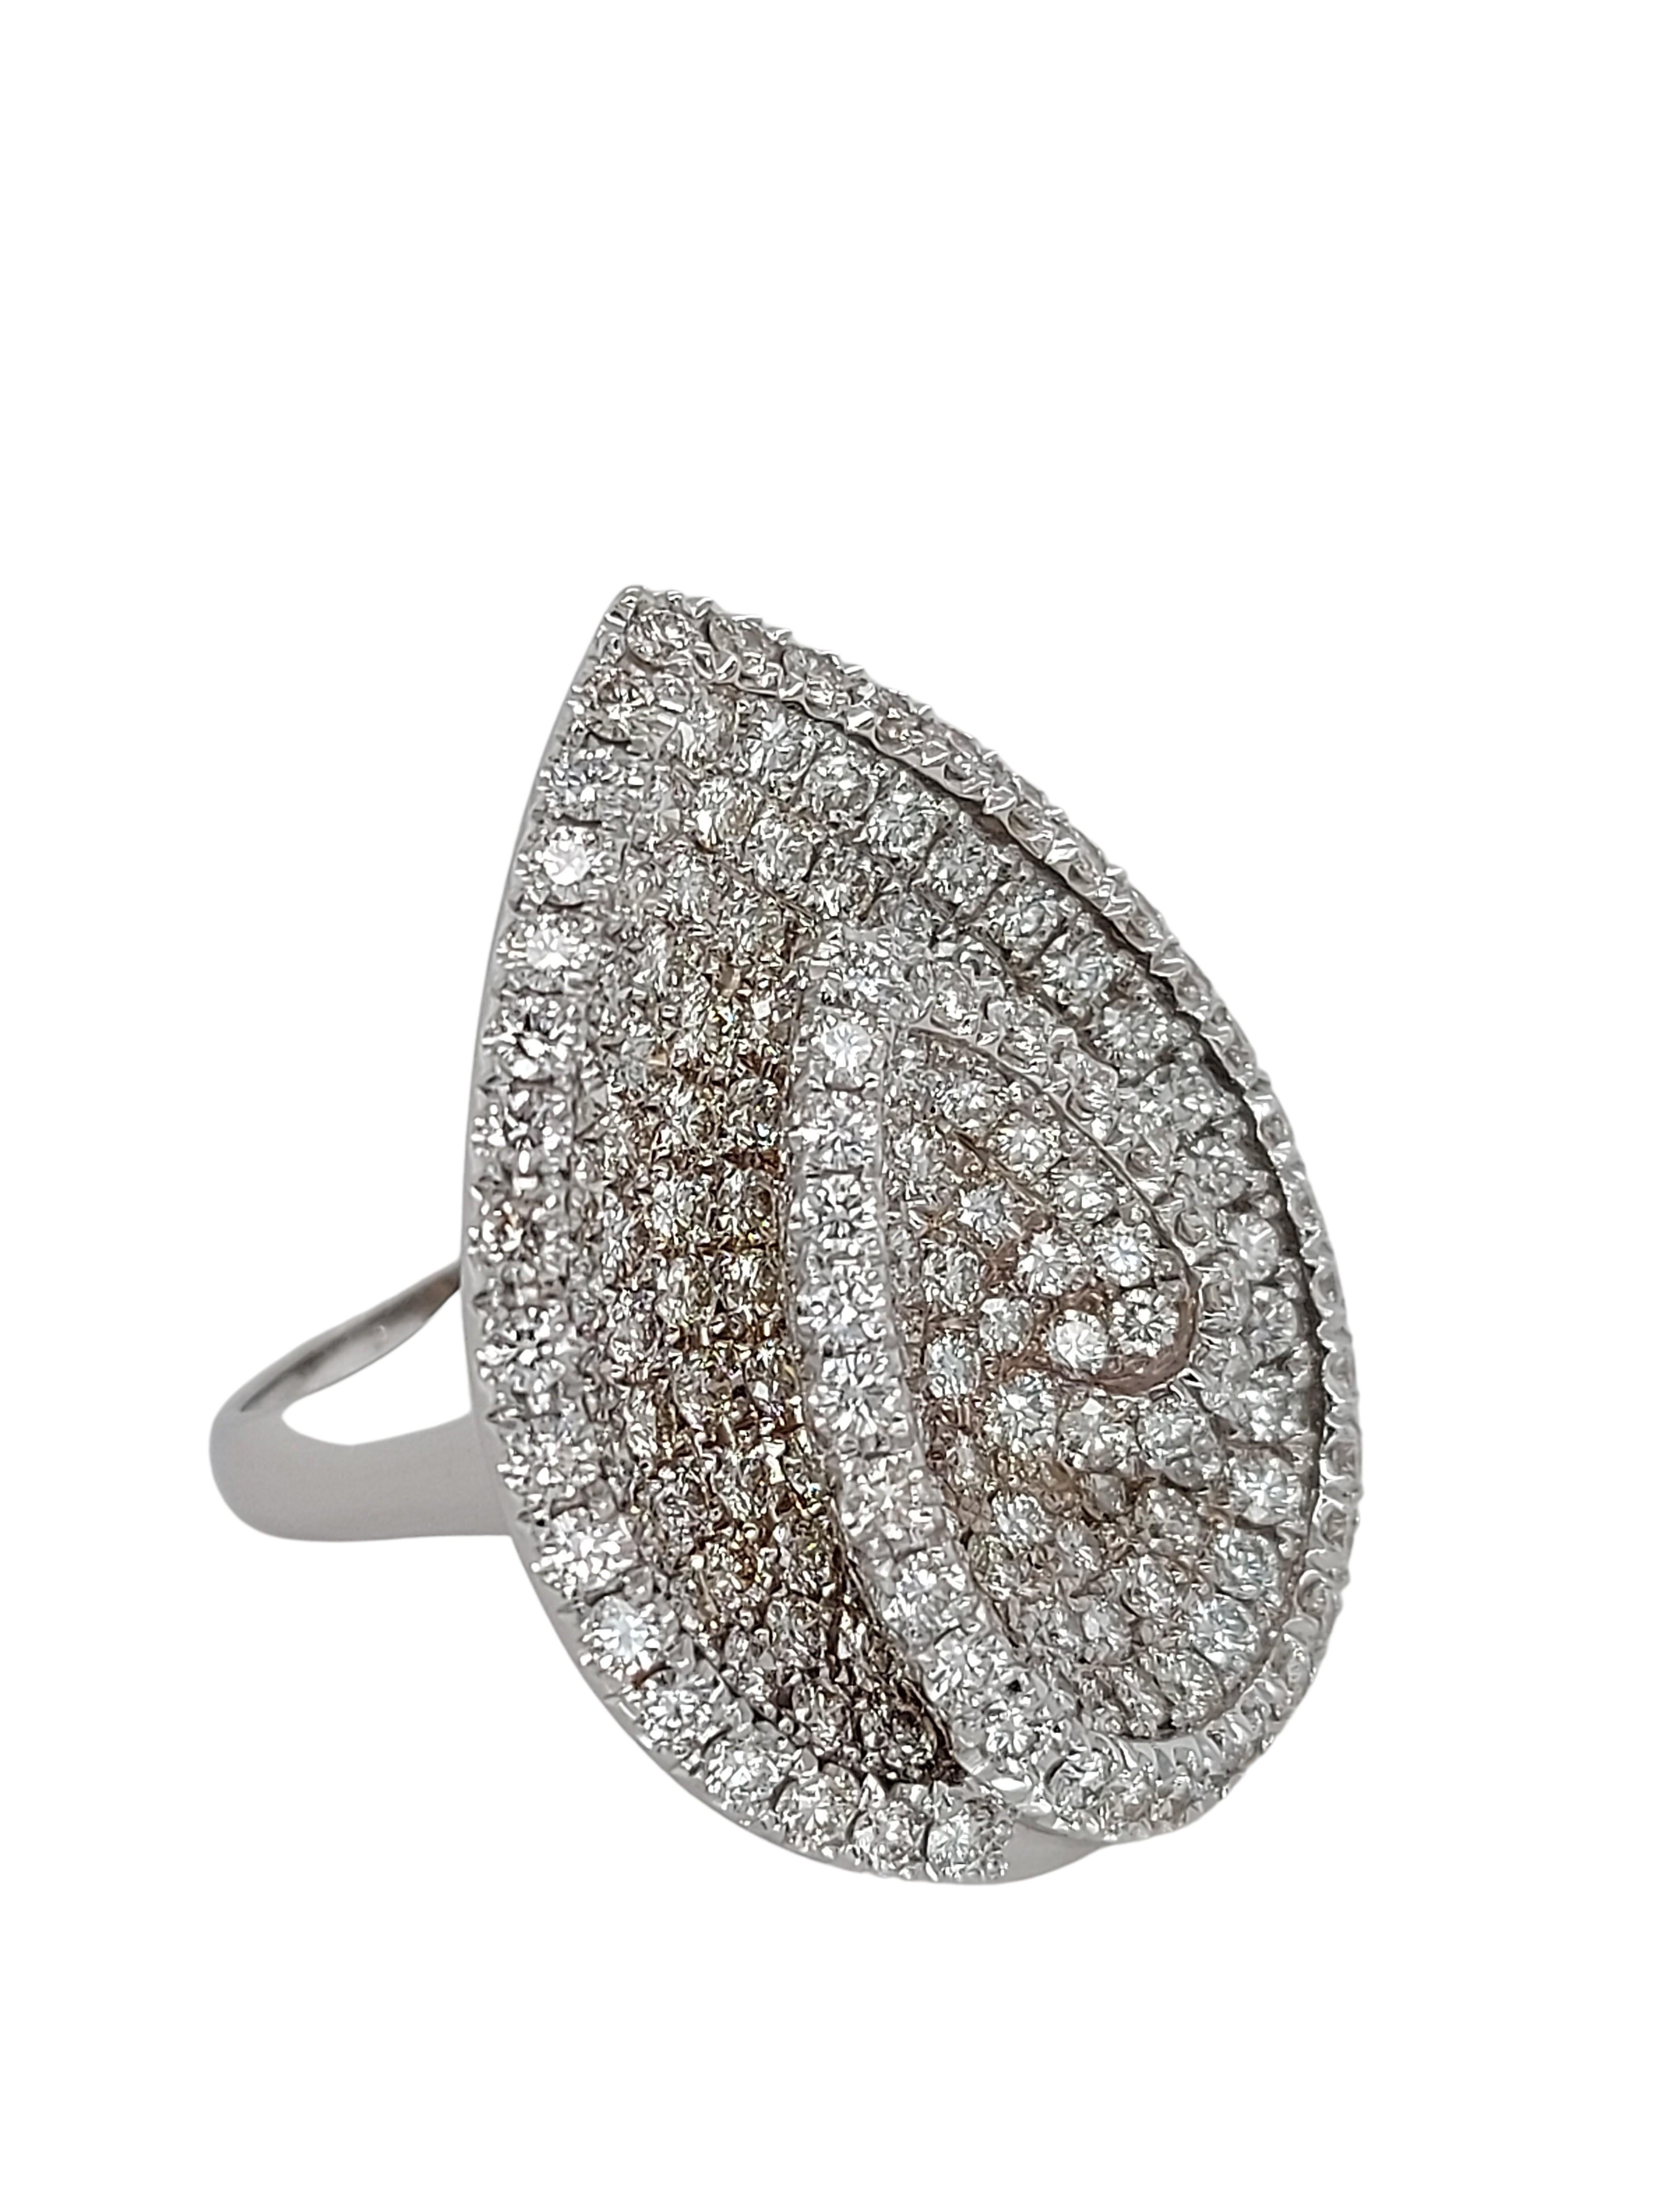 Brilliant Cut Magnificent 18kt Gold Pavé Diamond Pear Shape Ring For Sale